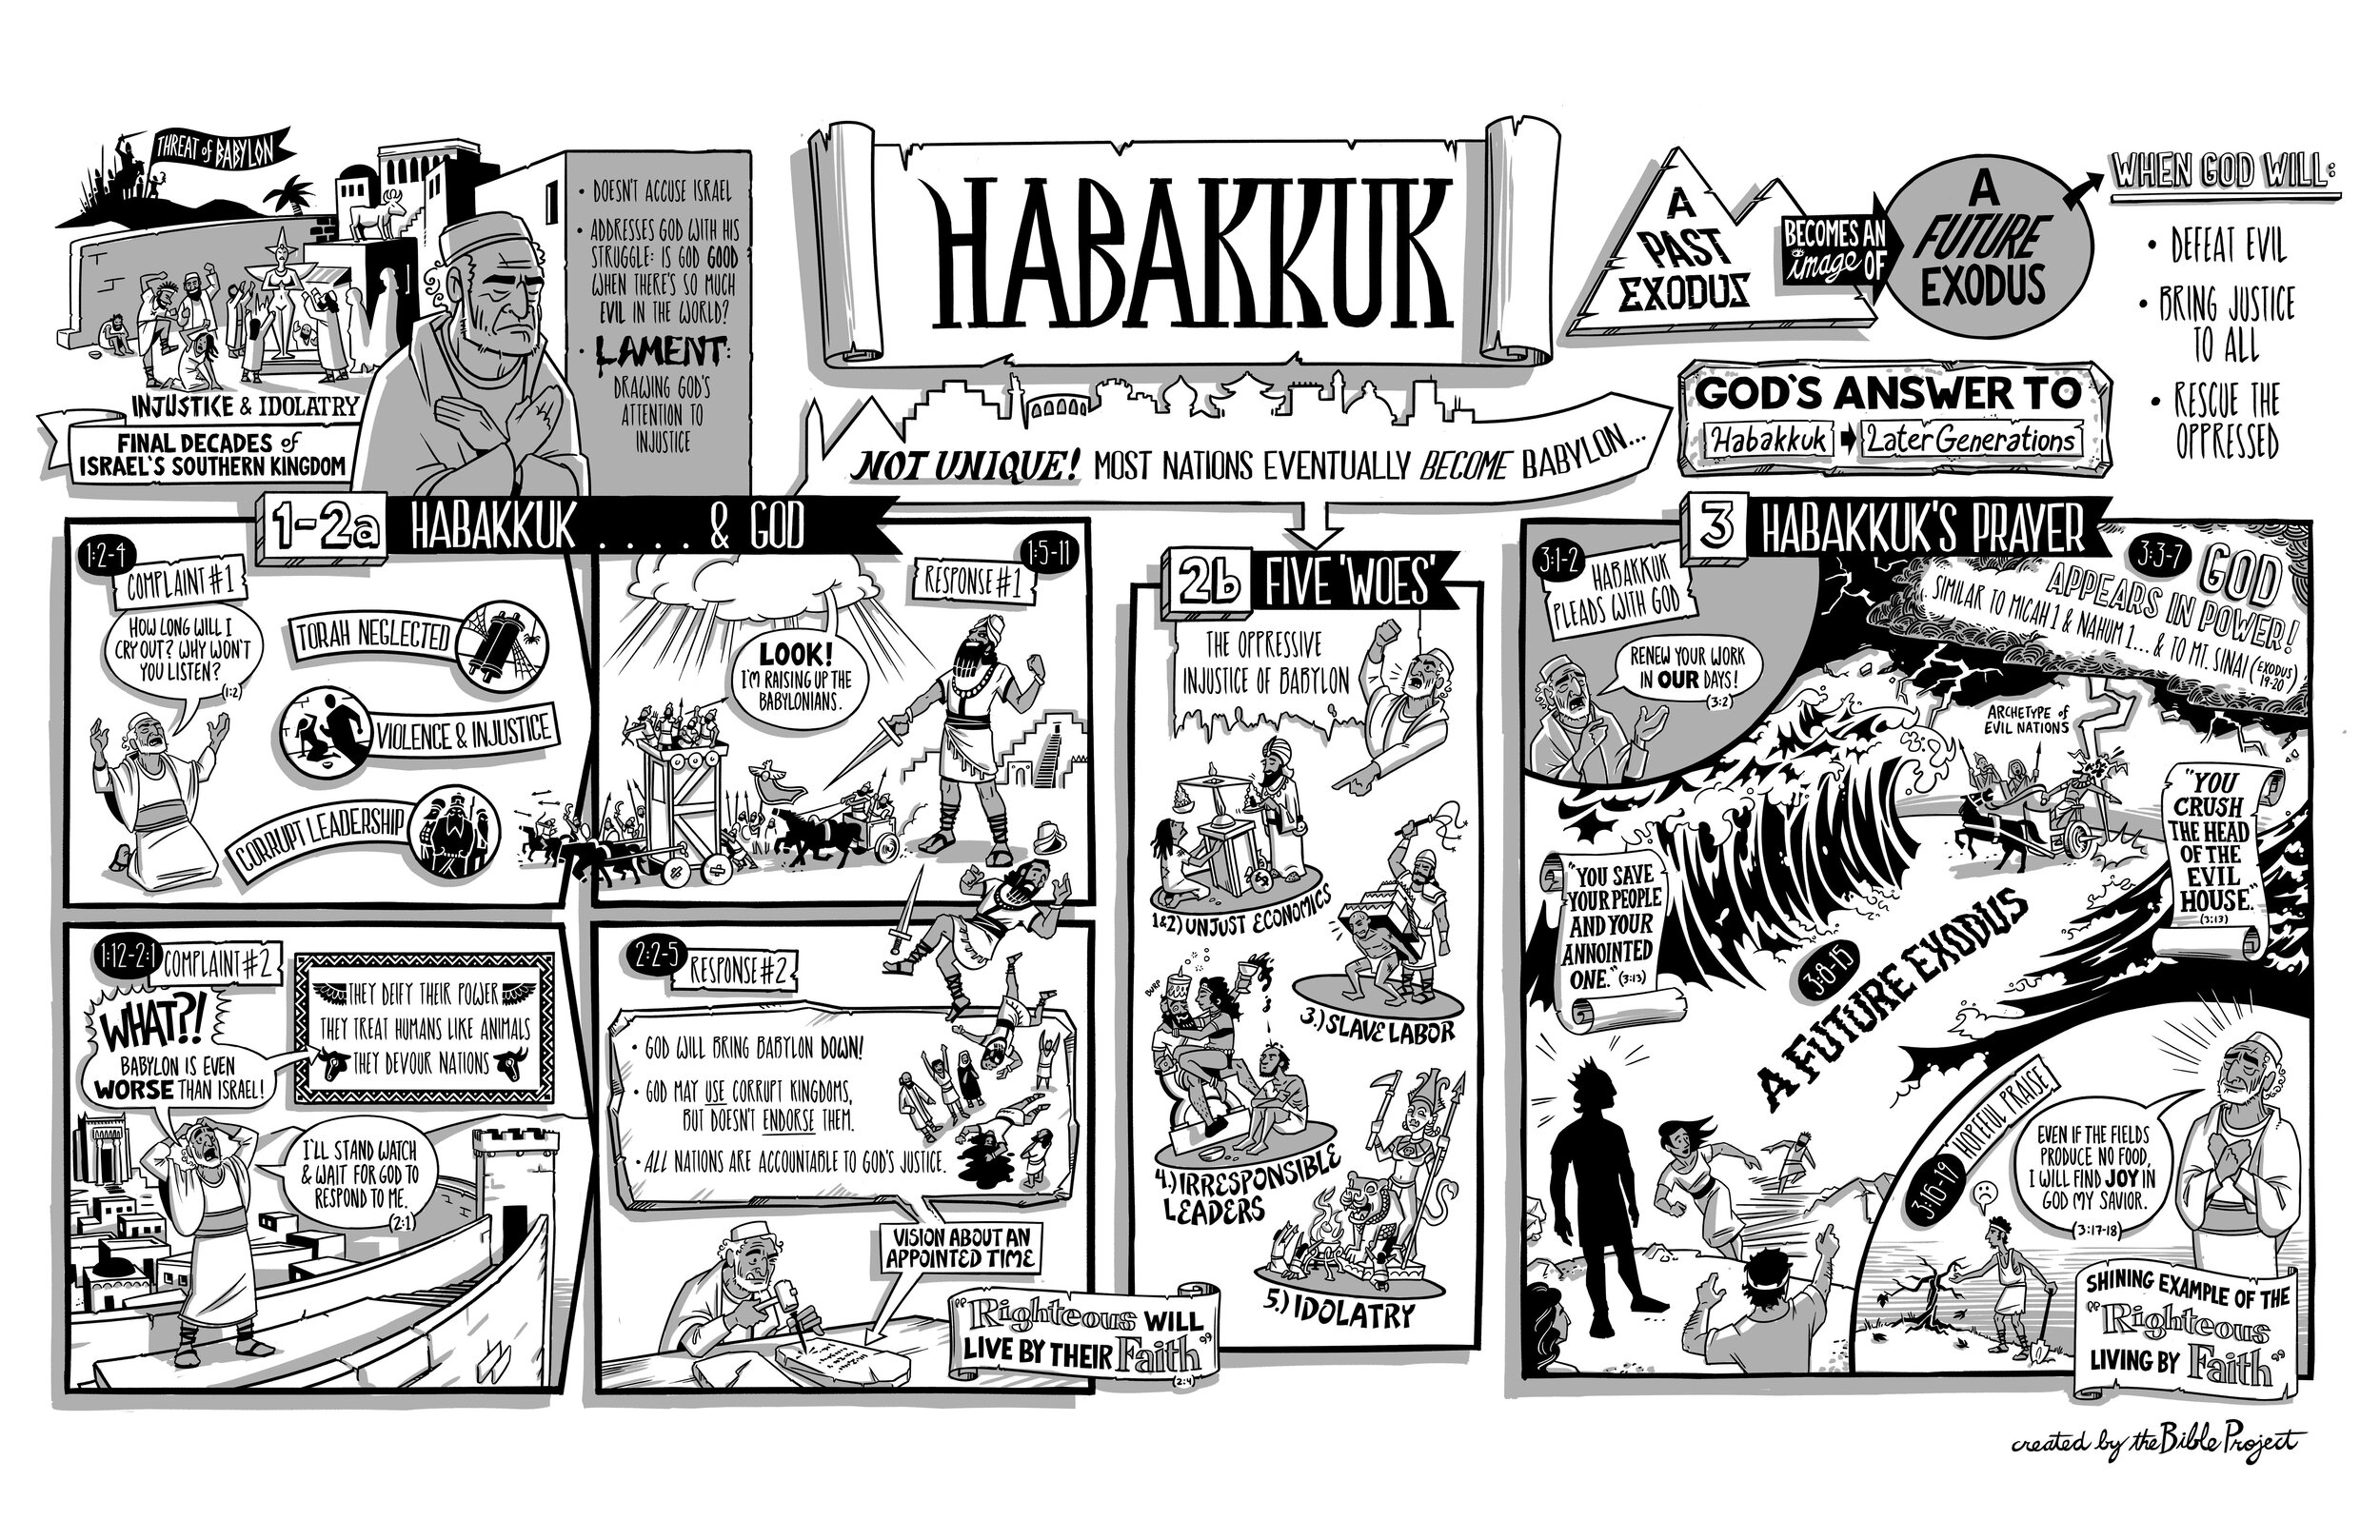 BibleProject: Habakkuk (Video)